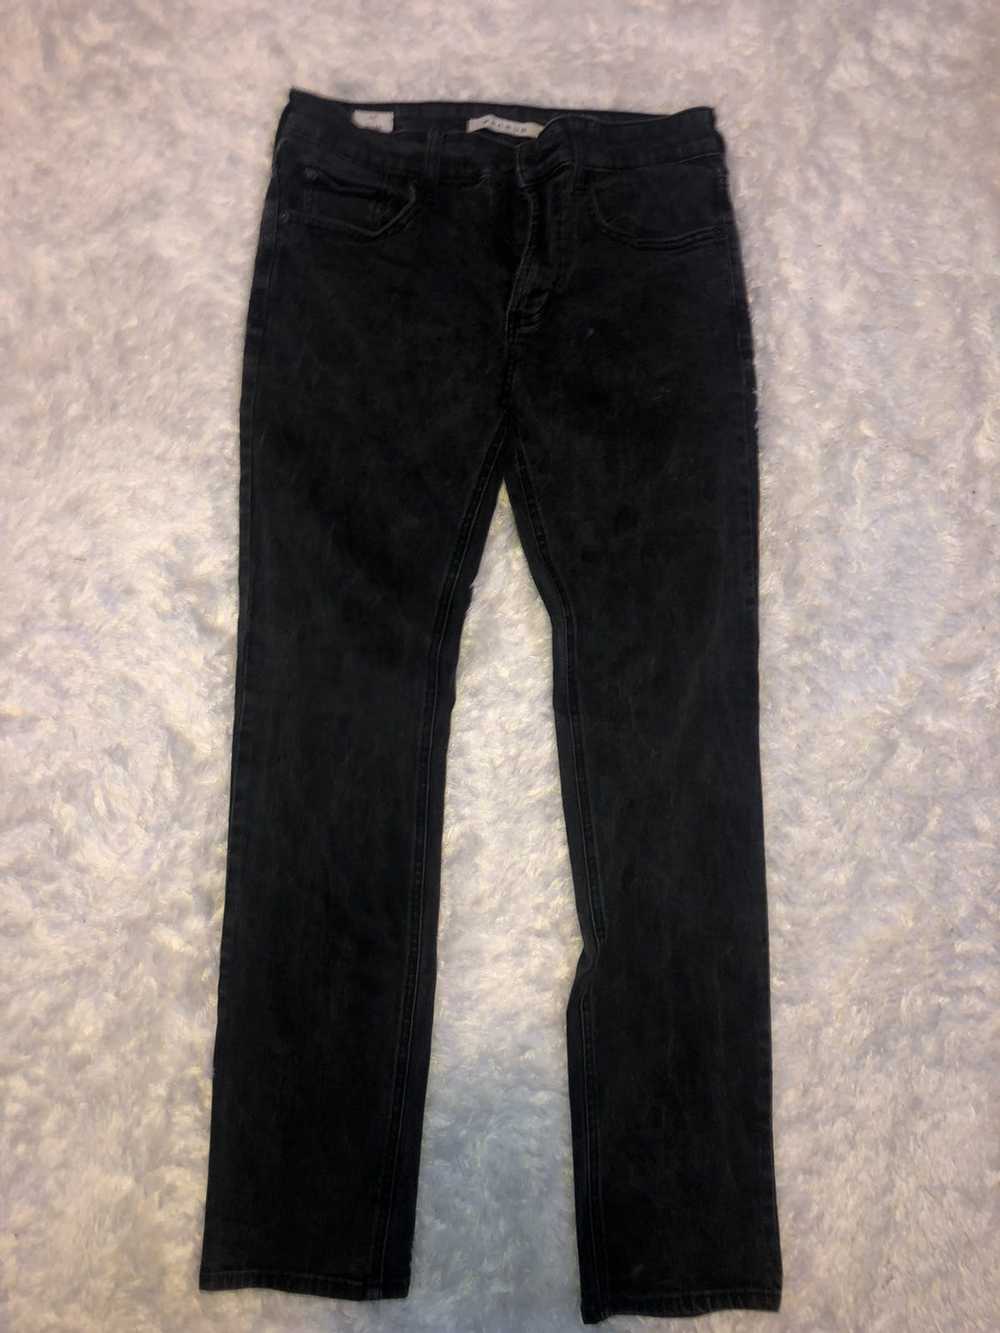 Pacsun Black Grayish Pacsun Jeans - image 1